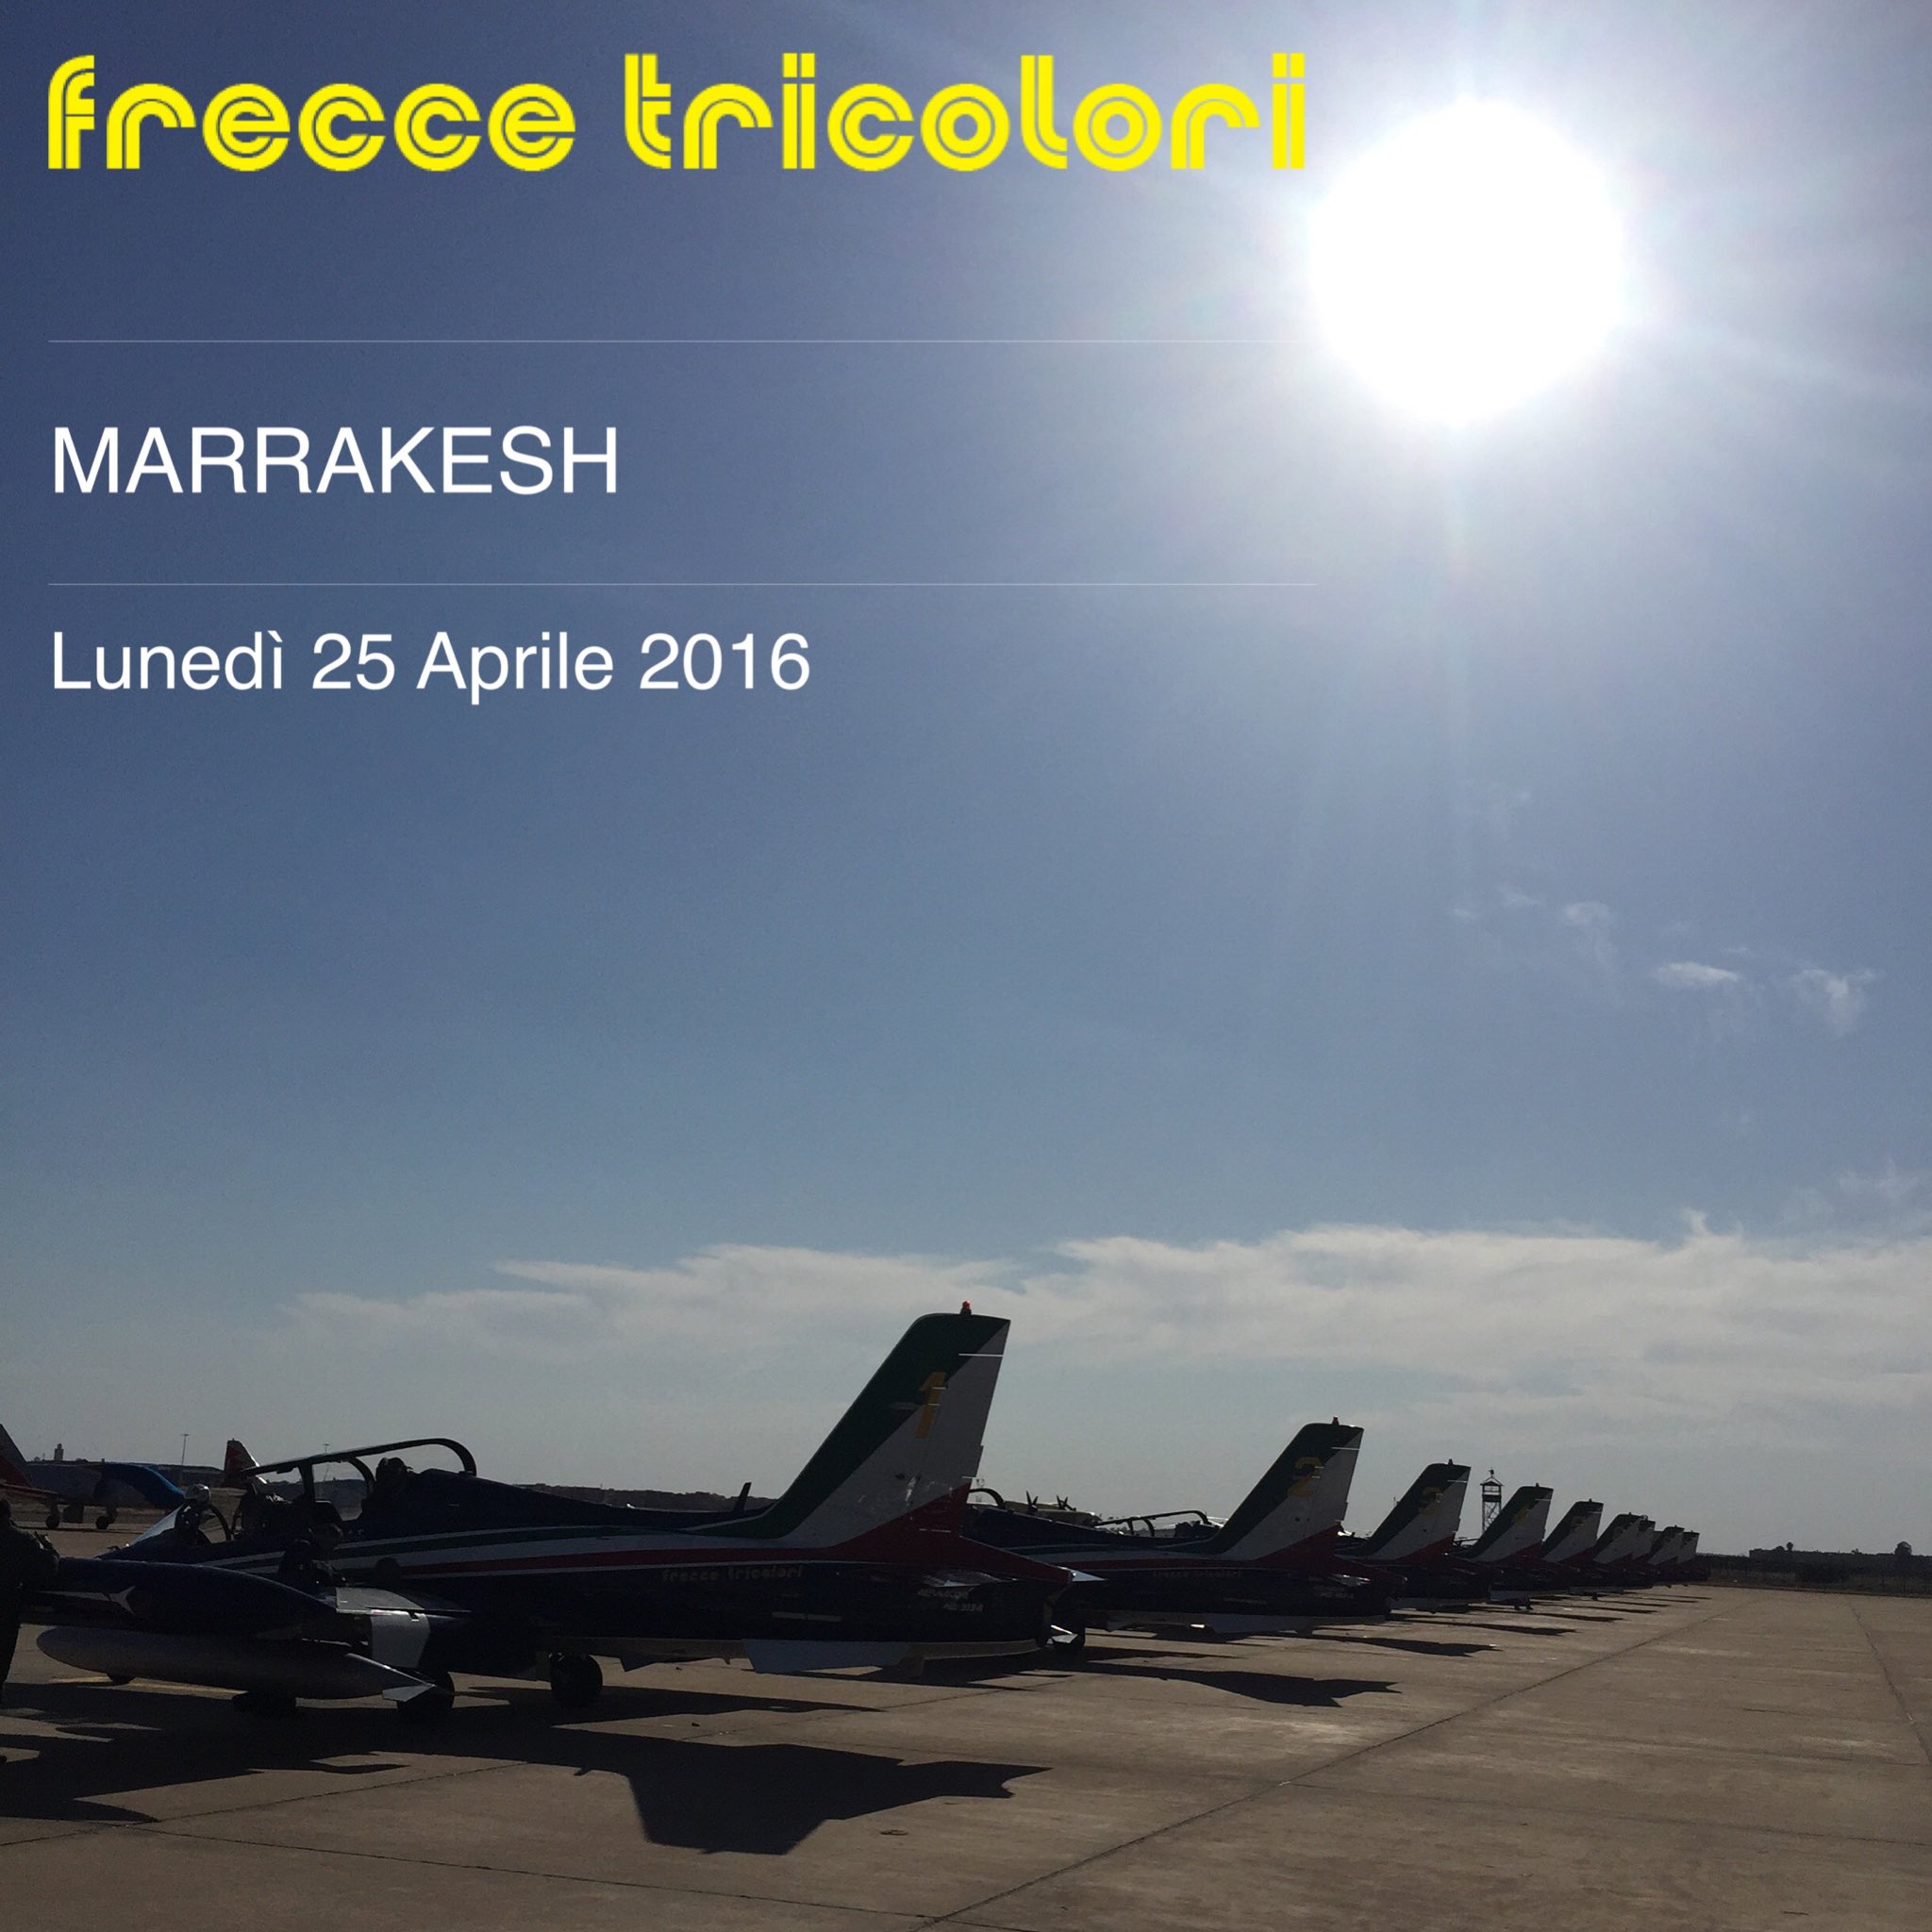 Marrakech Air Show 2016 - Aeroexpo 2016 - Page 7 Cg--aCqWUAQw1WM